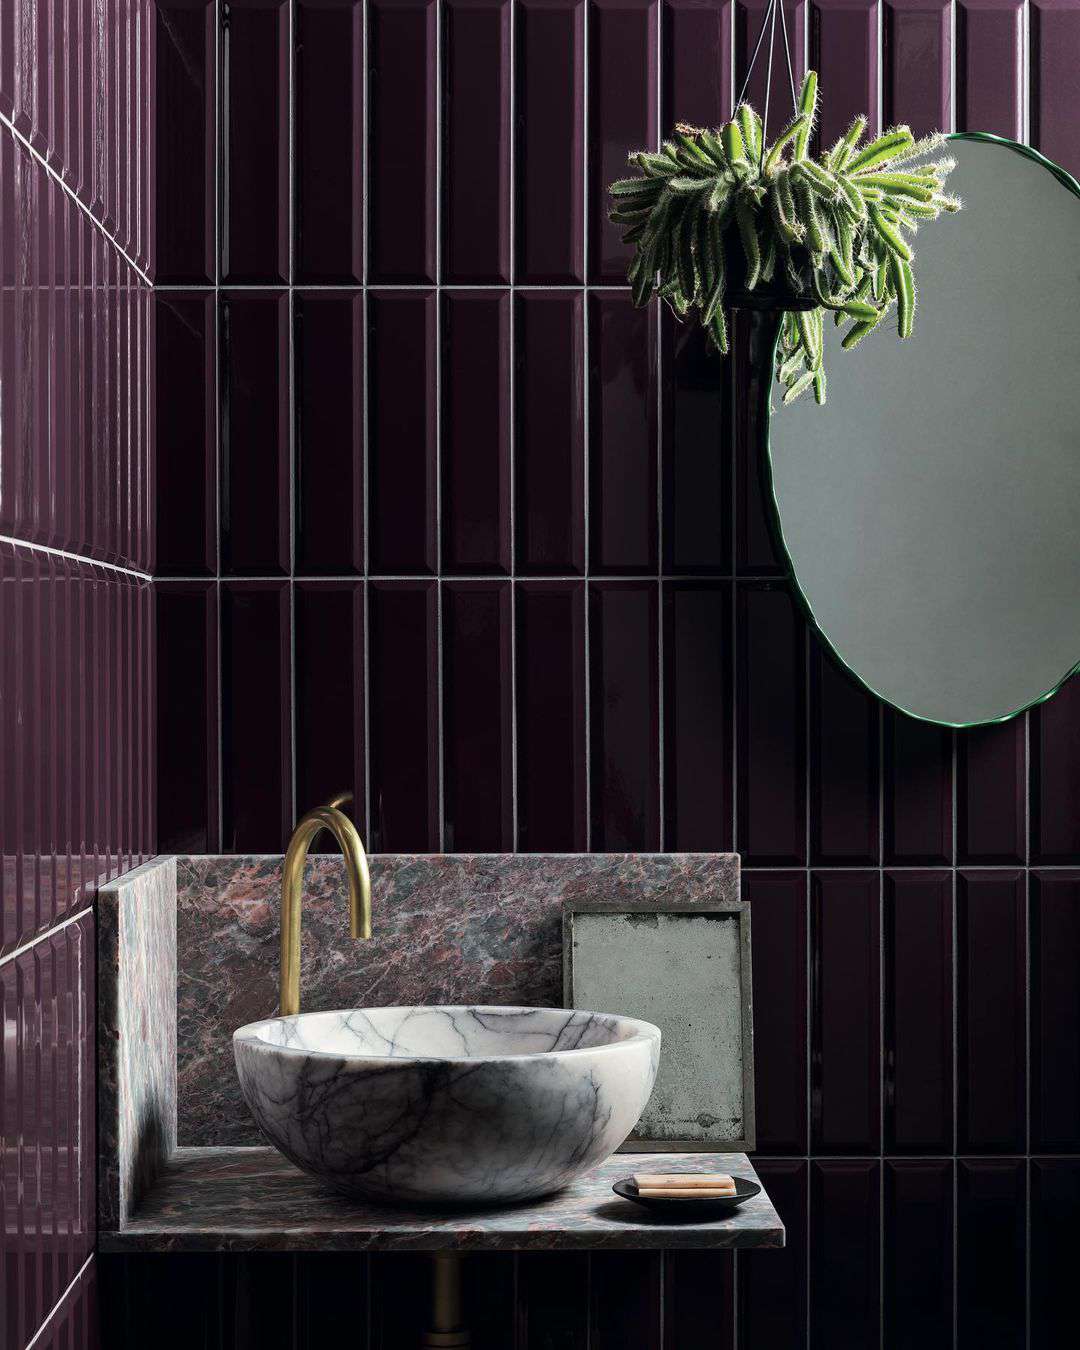 Cuarto de baño con azulejos de metro de color púrpura oscuro.